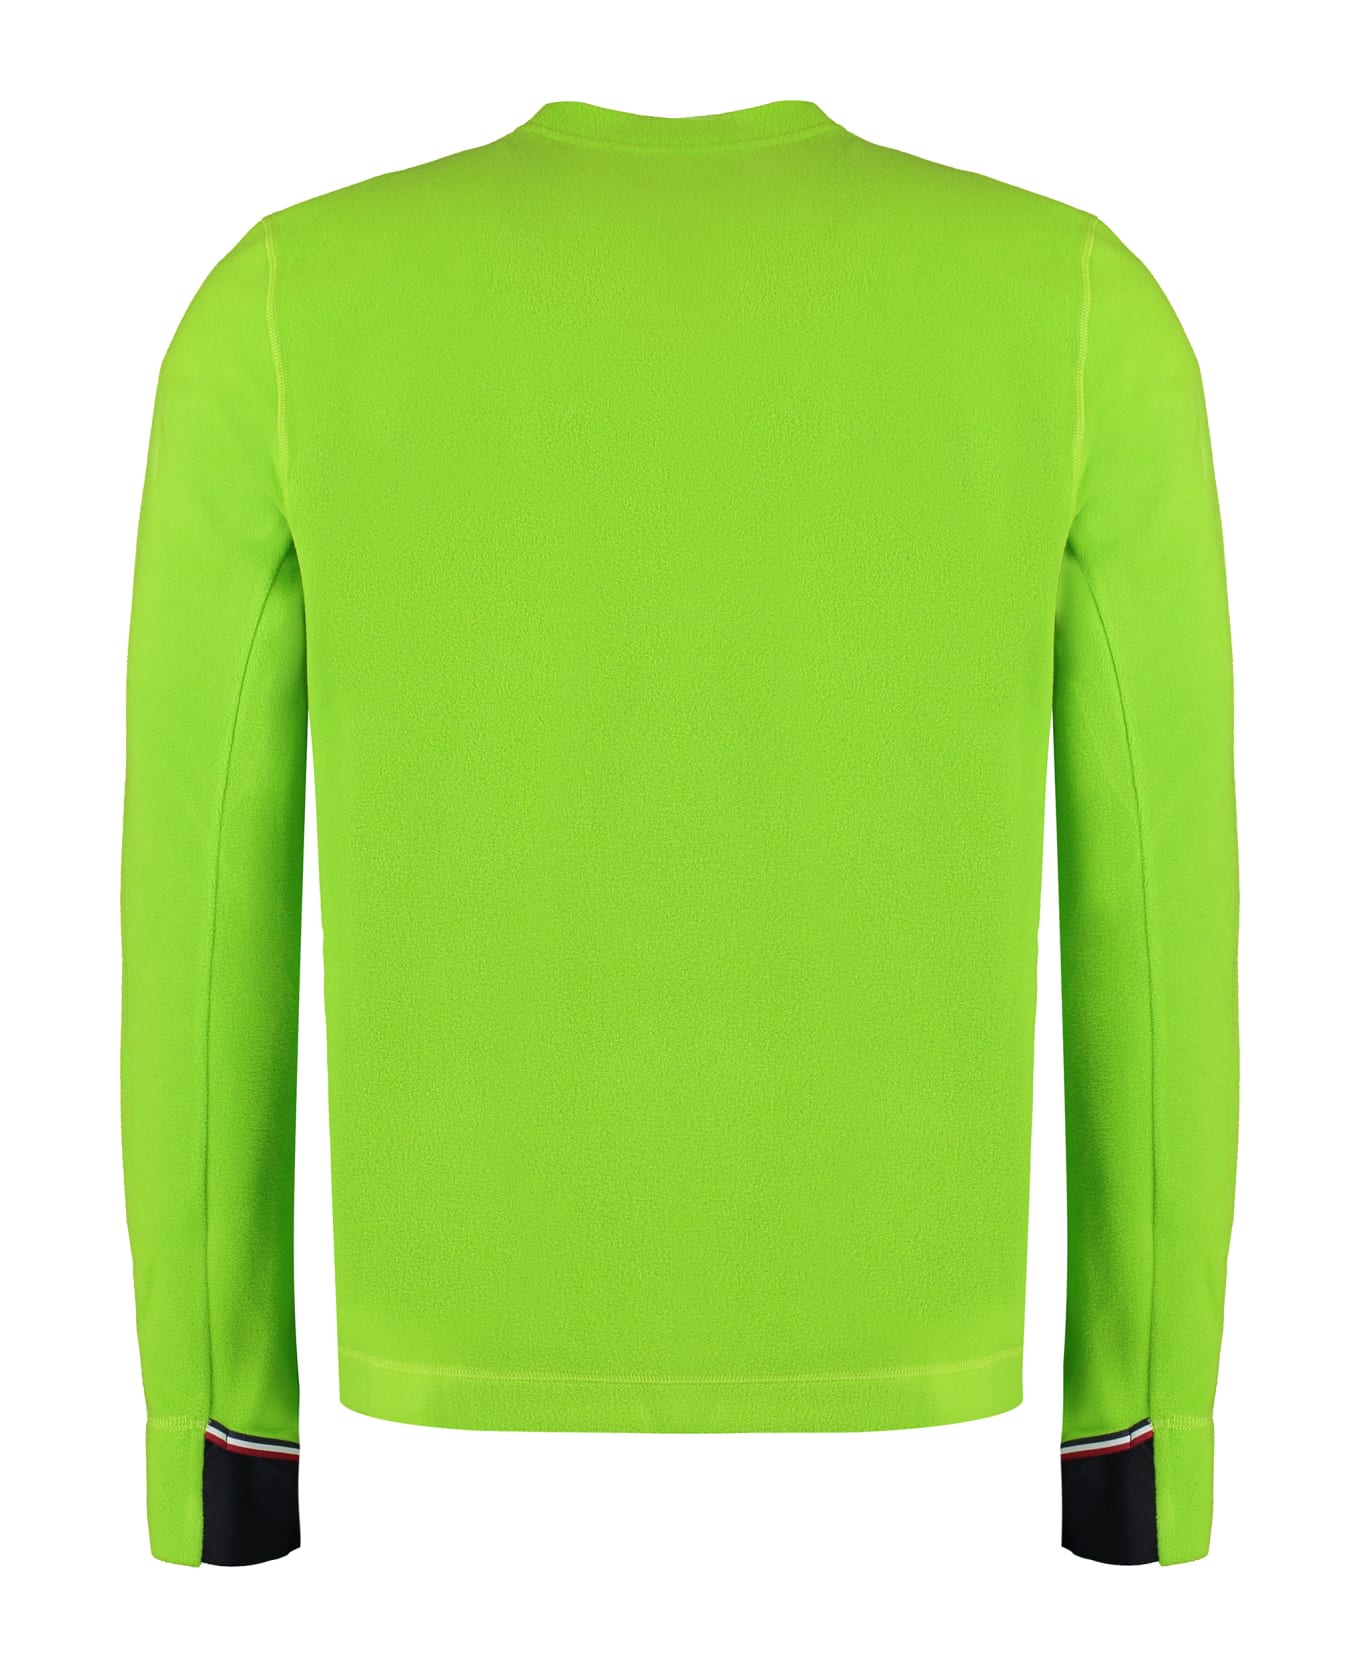 Moncler Grenoble Fleece Sweatshirt - Green